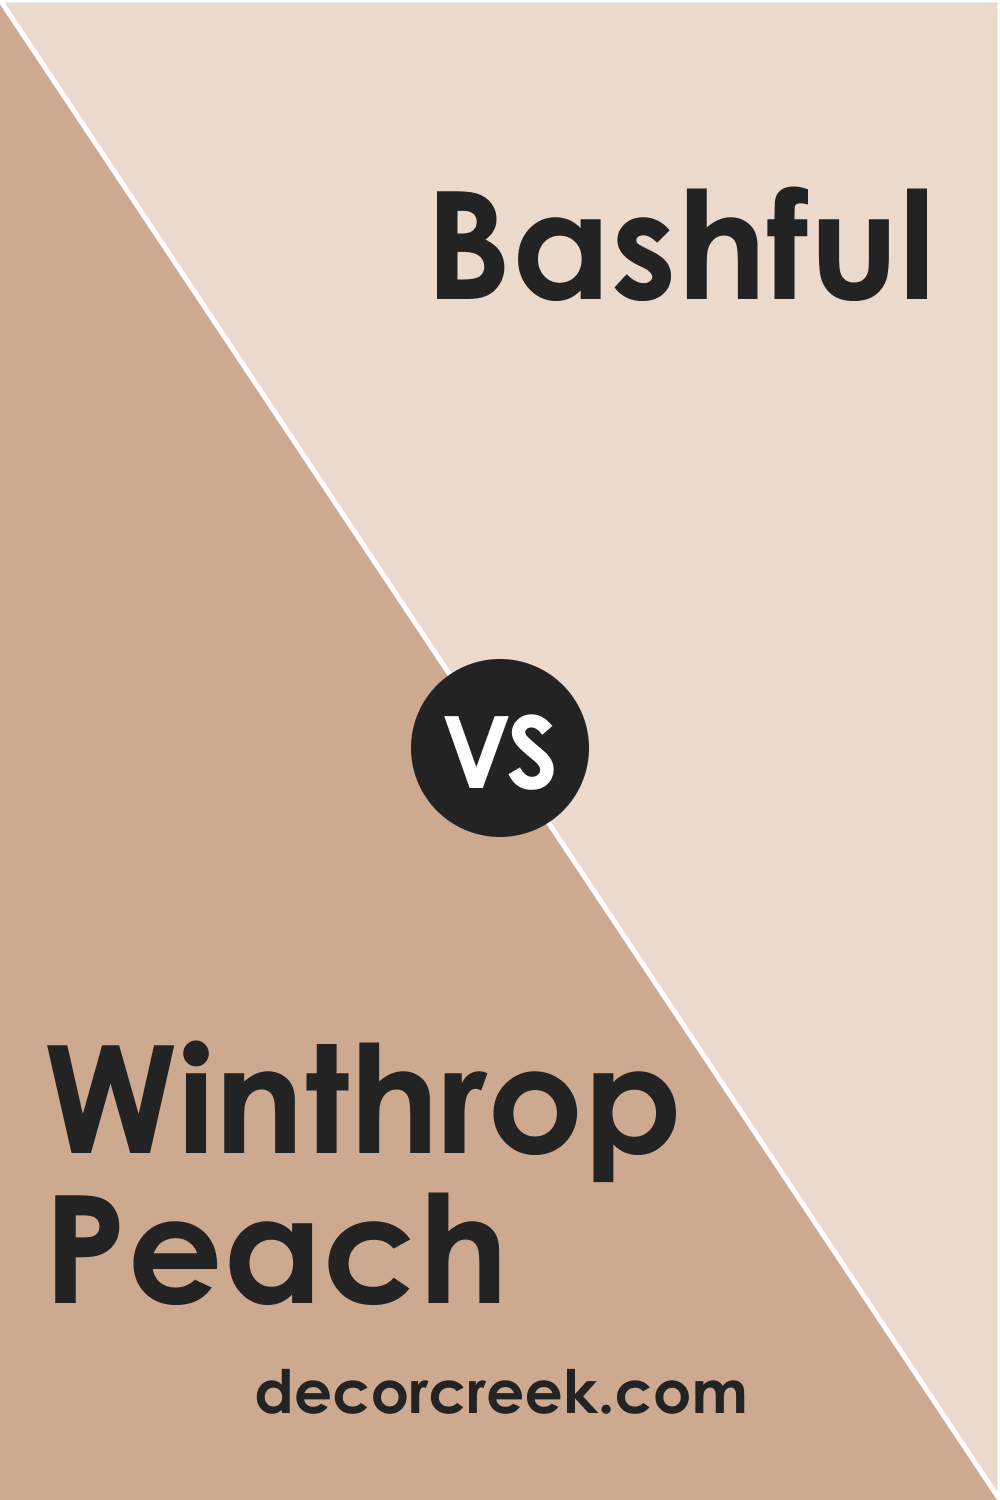 Winthrop Peach HC-55 vs. BM 1171 Bashful